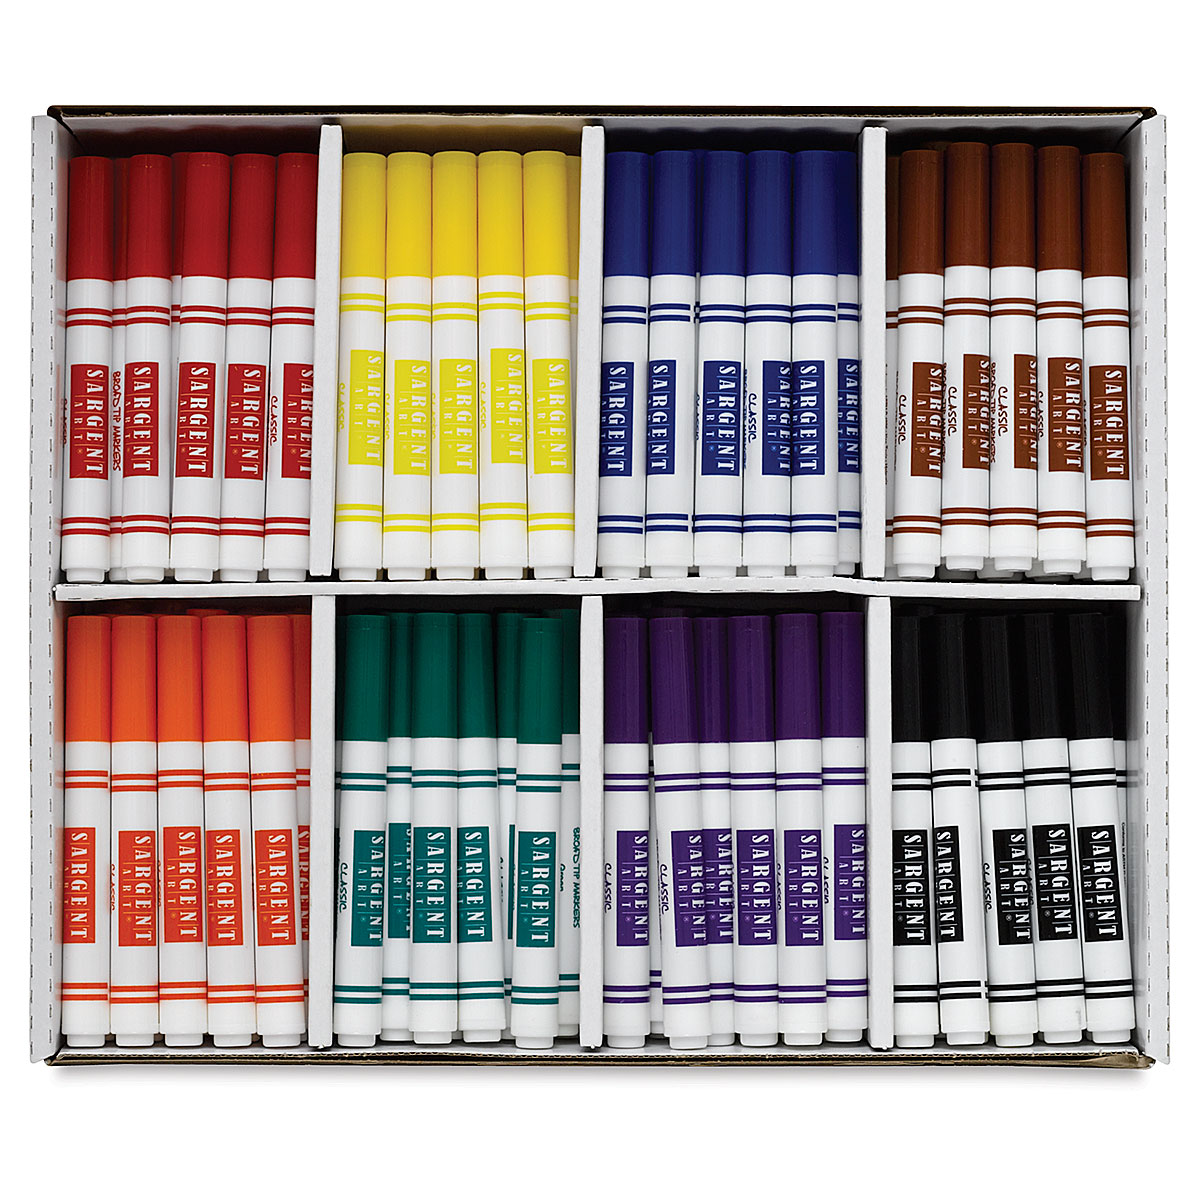 Sargent Art Classic Markers Brush Tip 20 Colors Per Pack 3 Packs